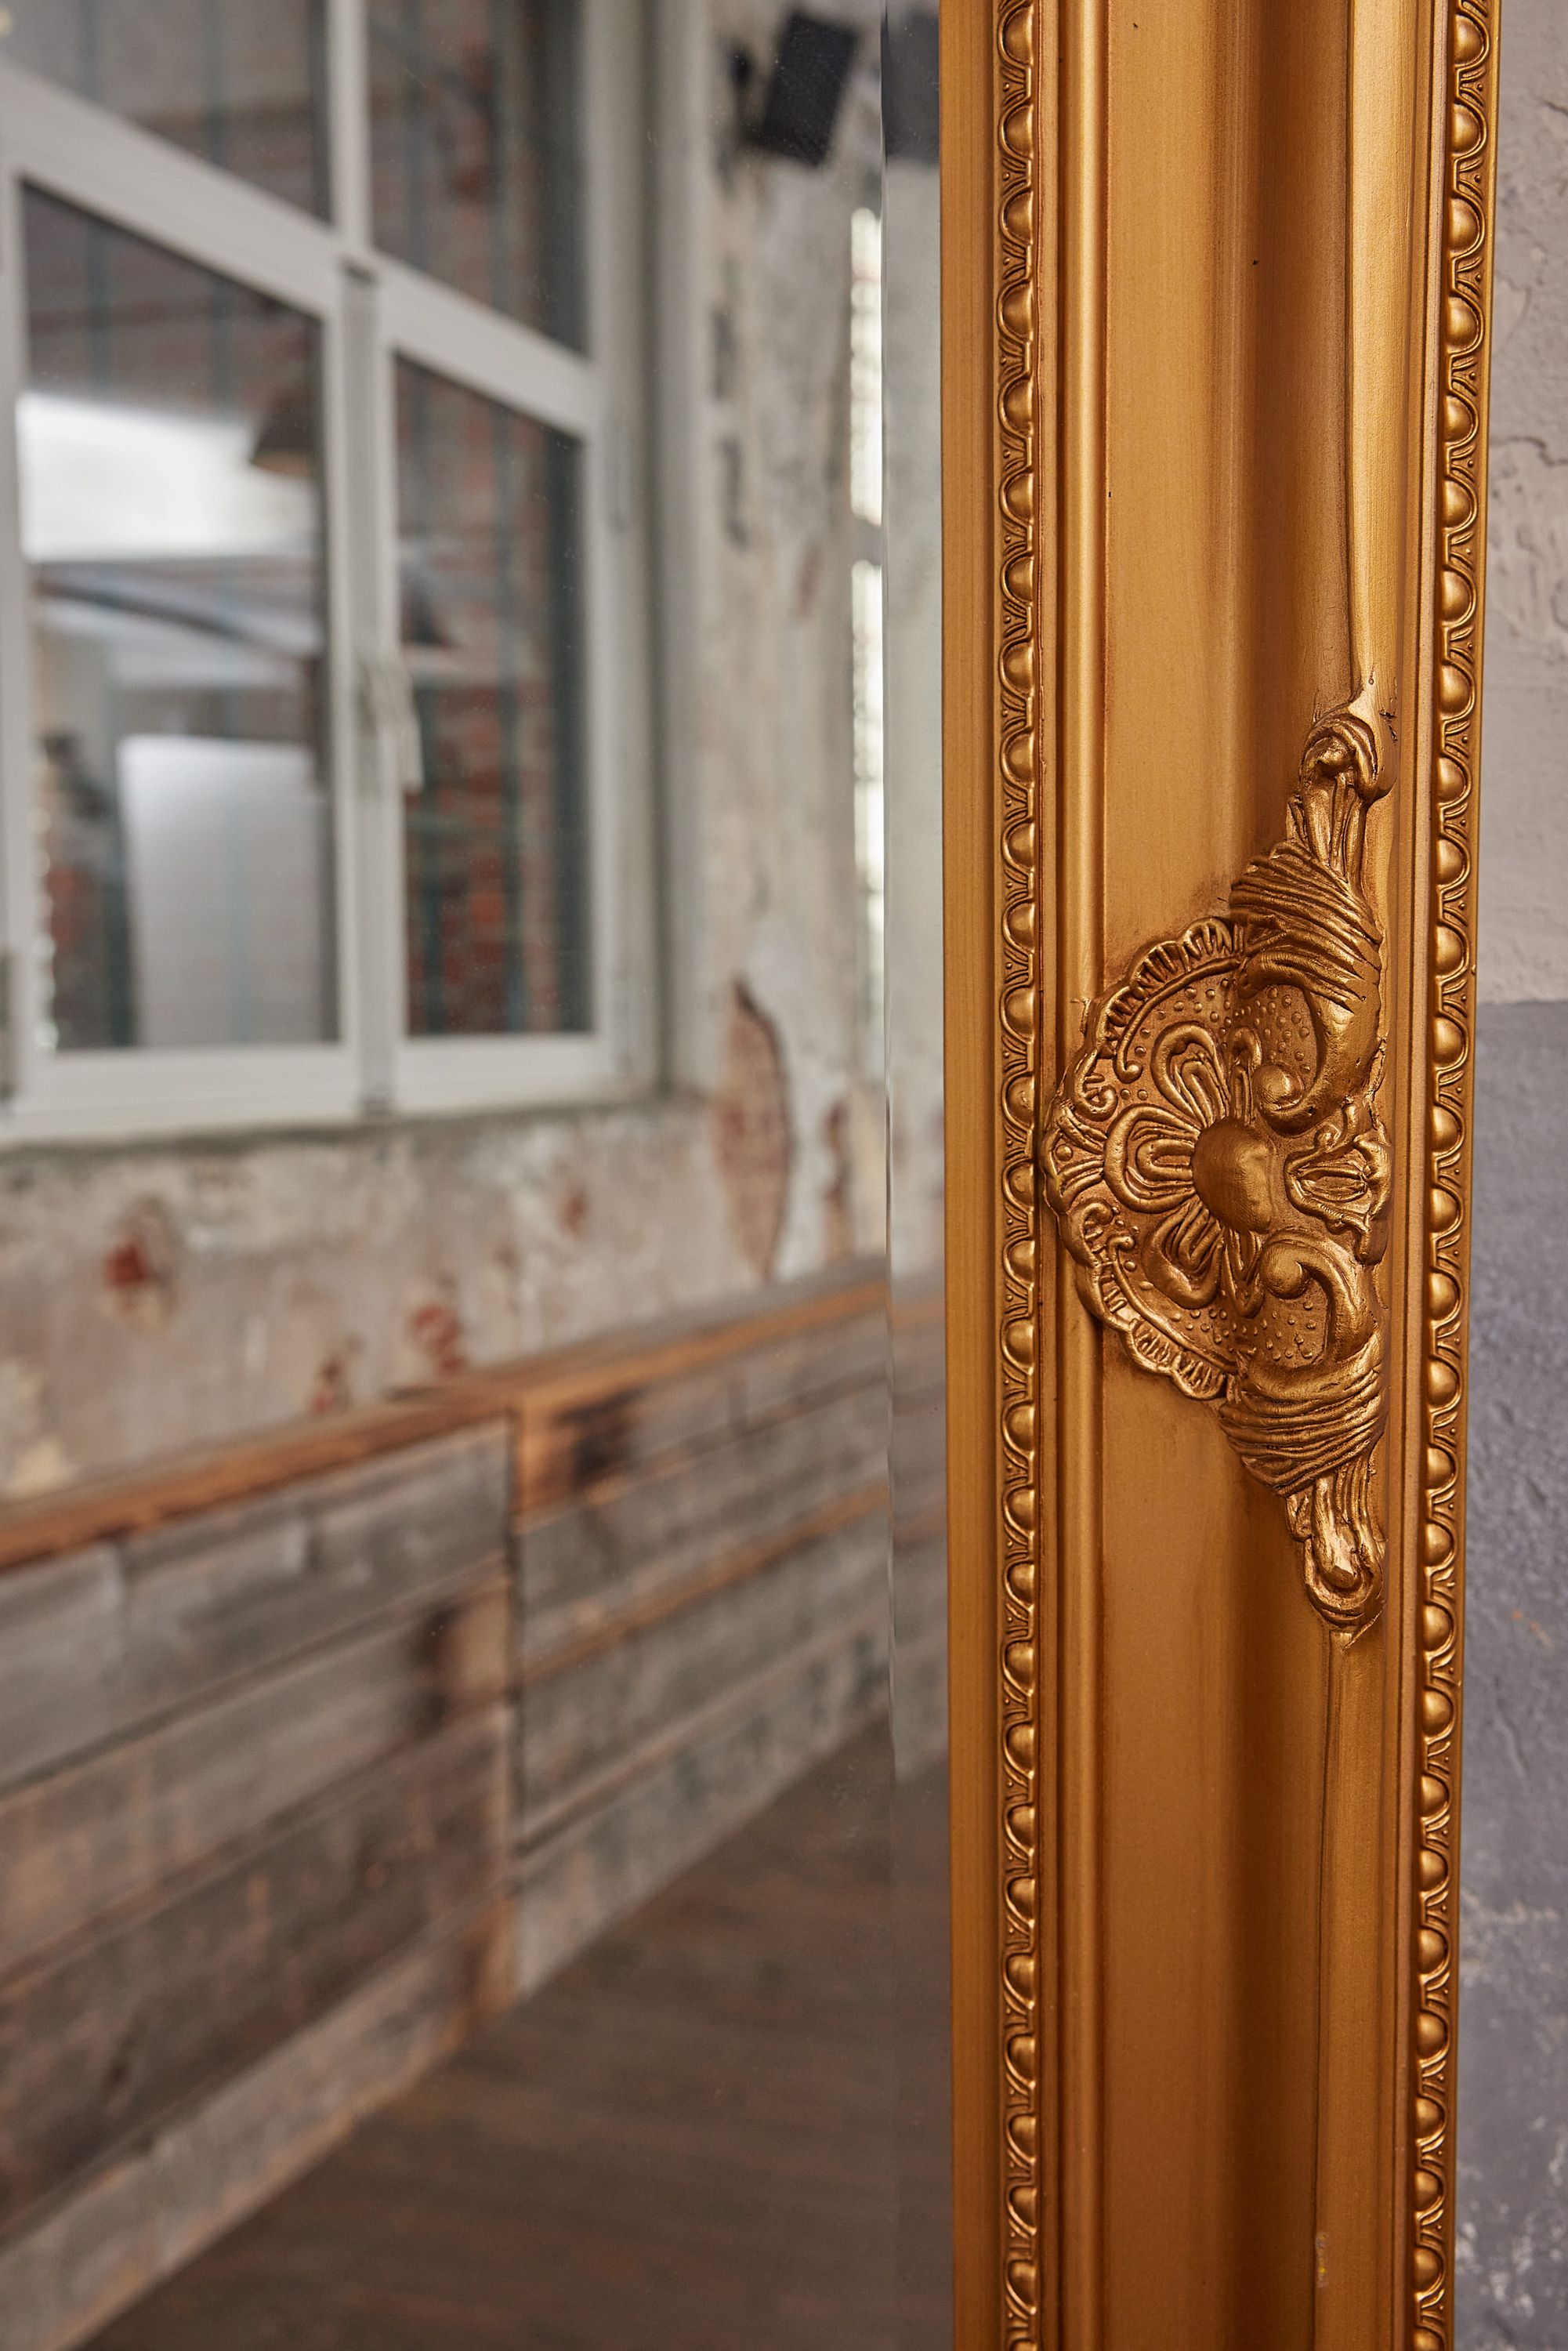 LC Home Wandspiegel Barock XXL Spiegel Gold ca. 200 x 100 cm Antik-Stil Ganzkörperspiegel